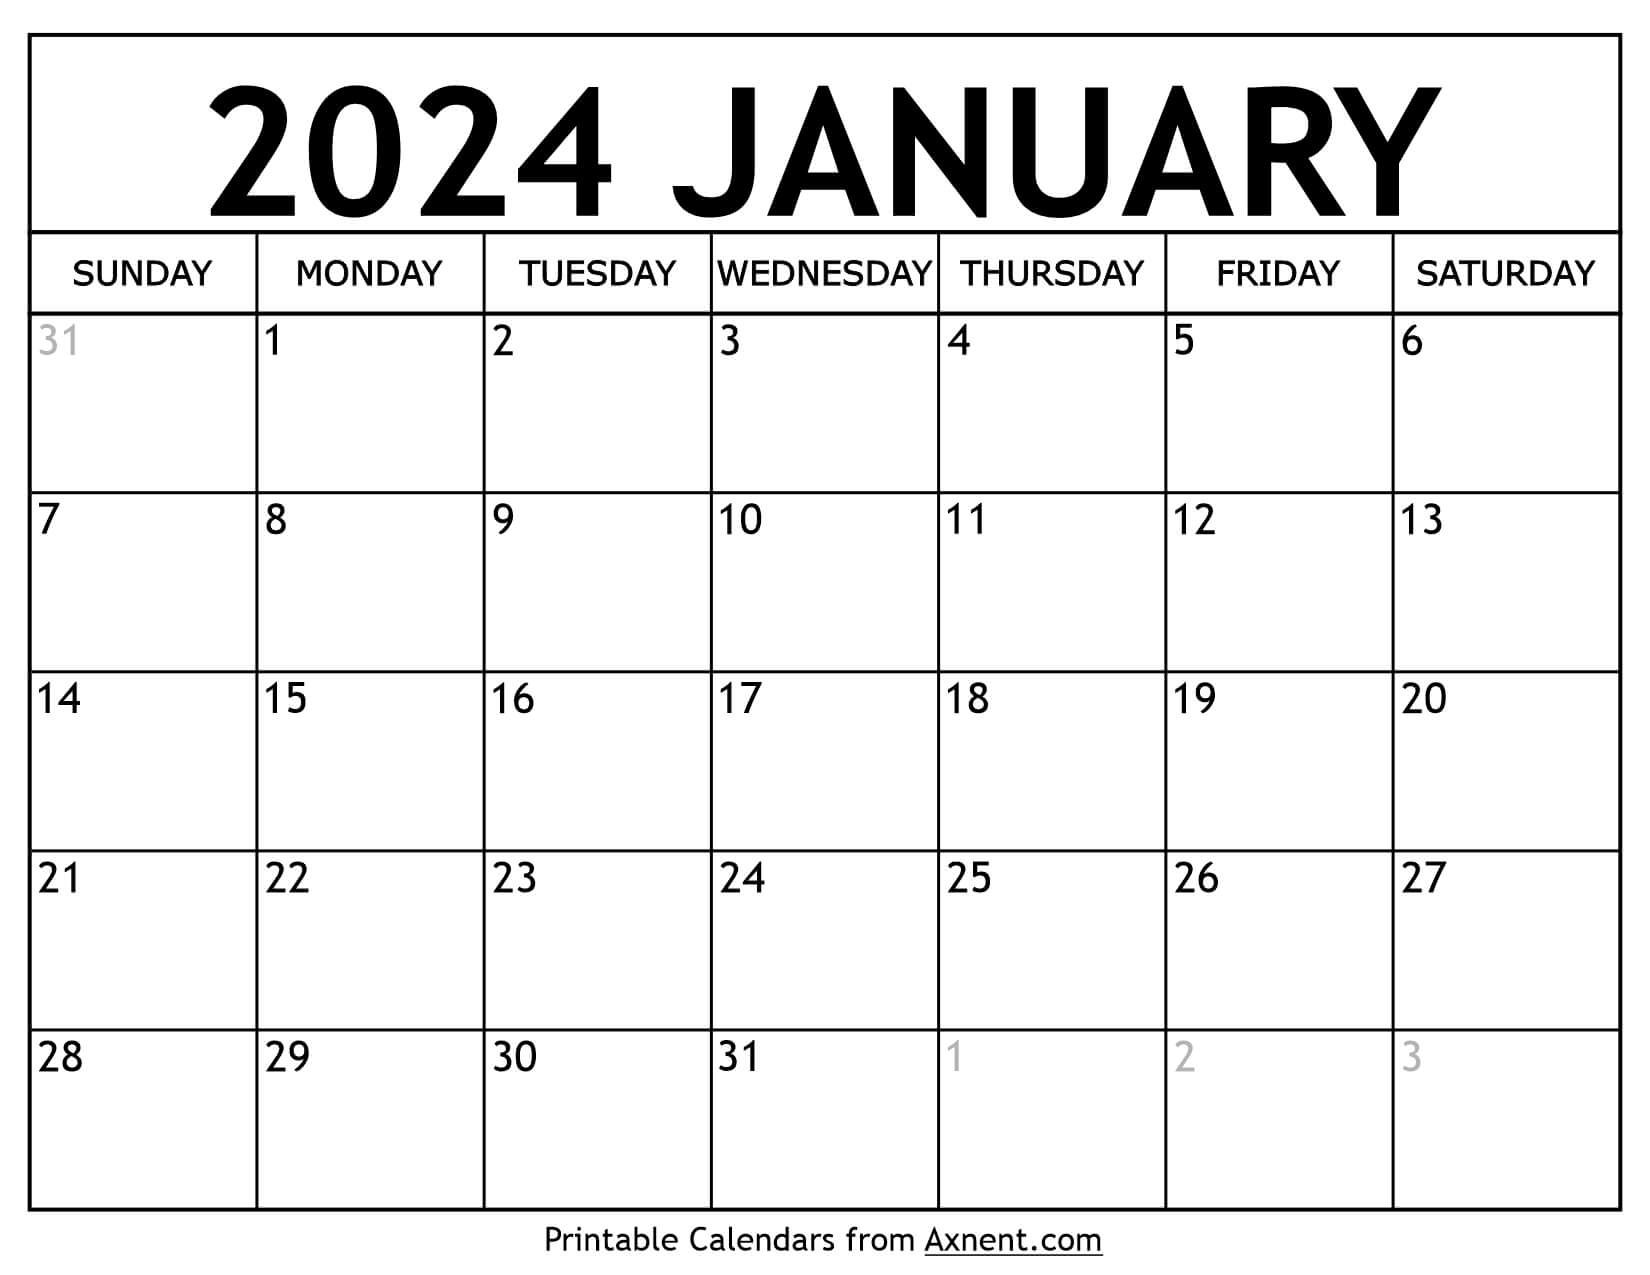 Printable January 2024 Calendar Template - Print Now for Free Printable Calendar Templates January 2024